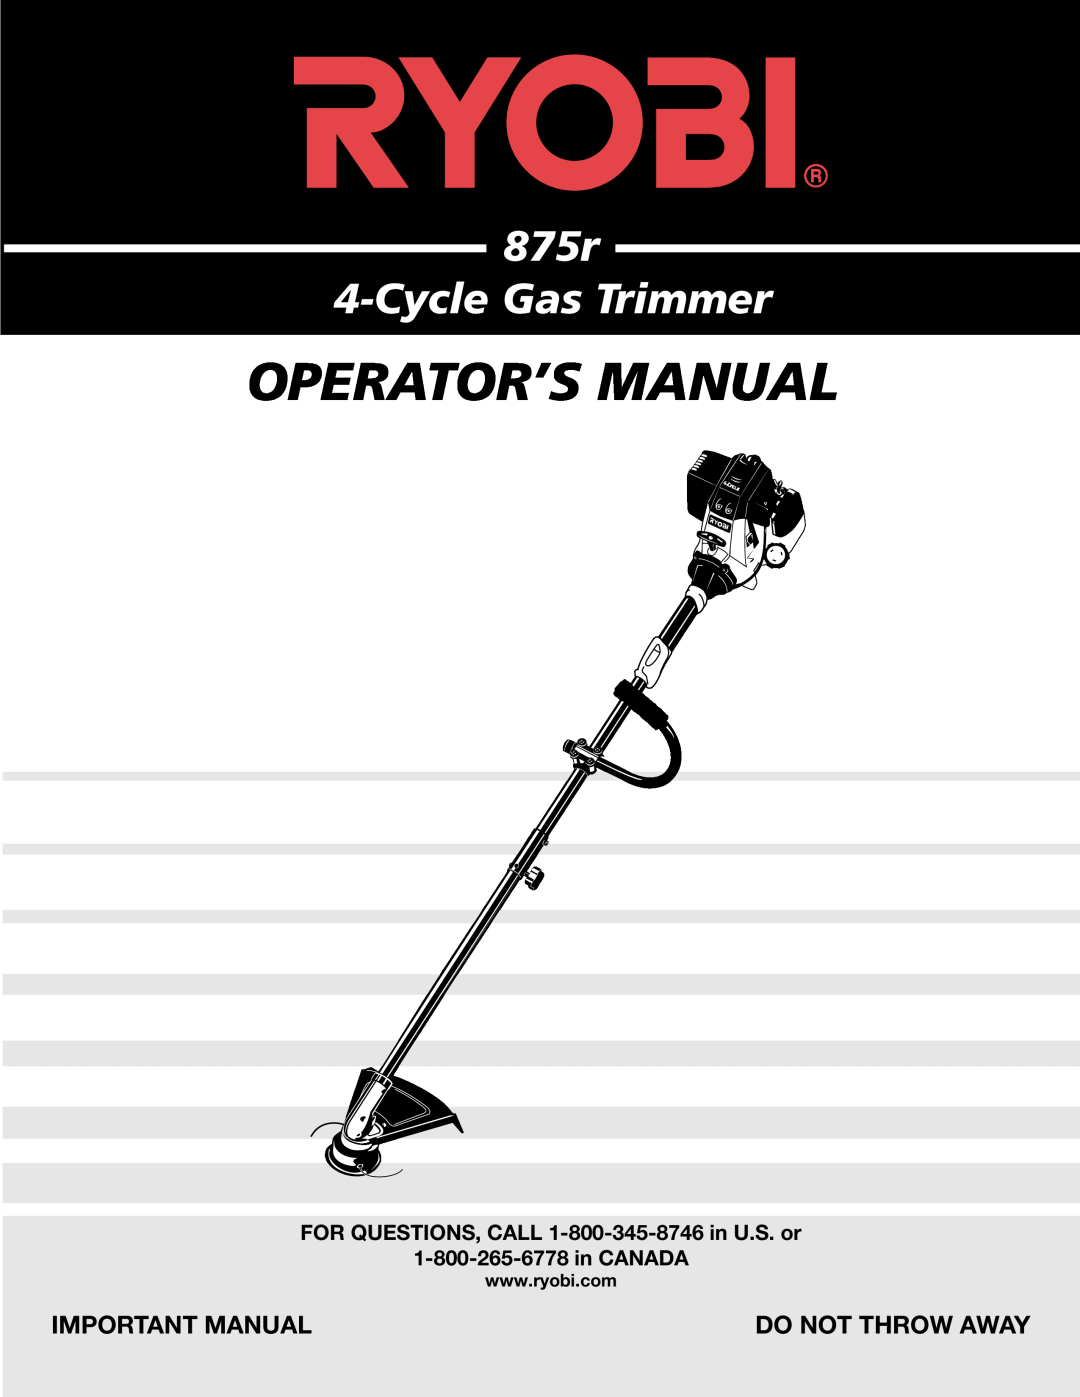 Ryobi Outdoor manual Important Manual, Operator’S Manual, 875r 4-CycleGas Trimmer, Do Not Throw Away 